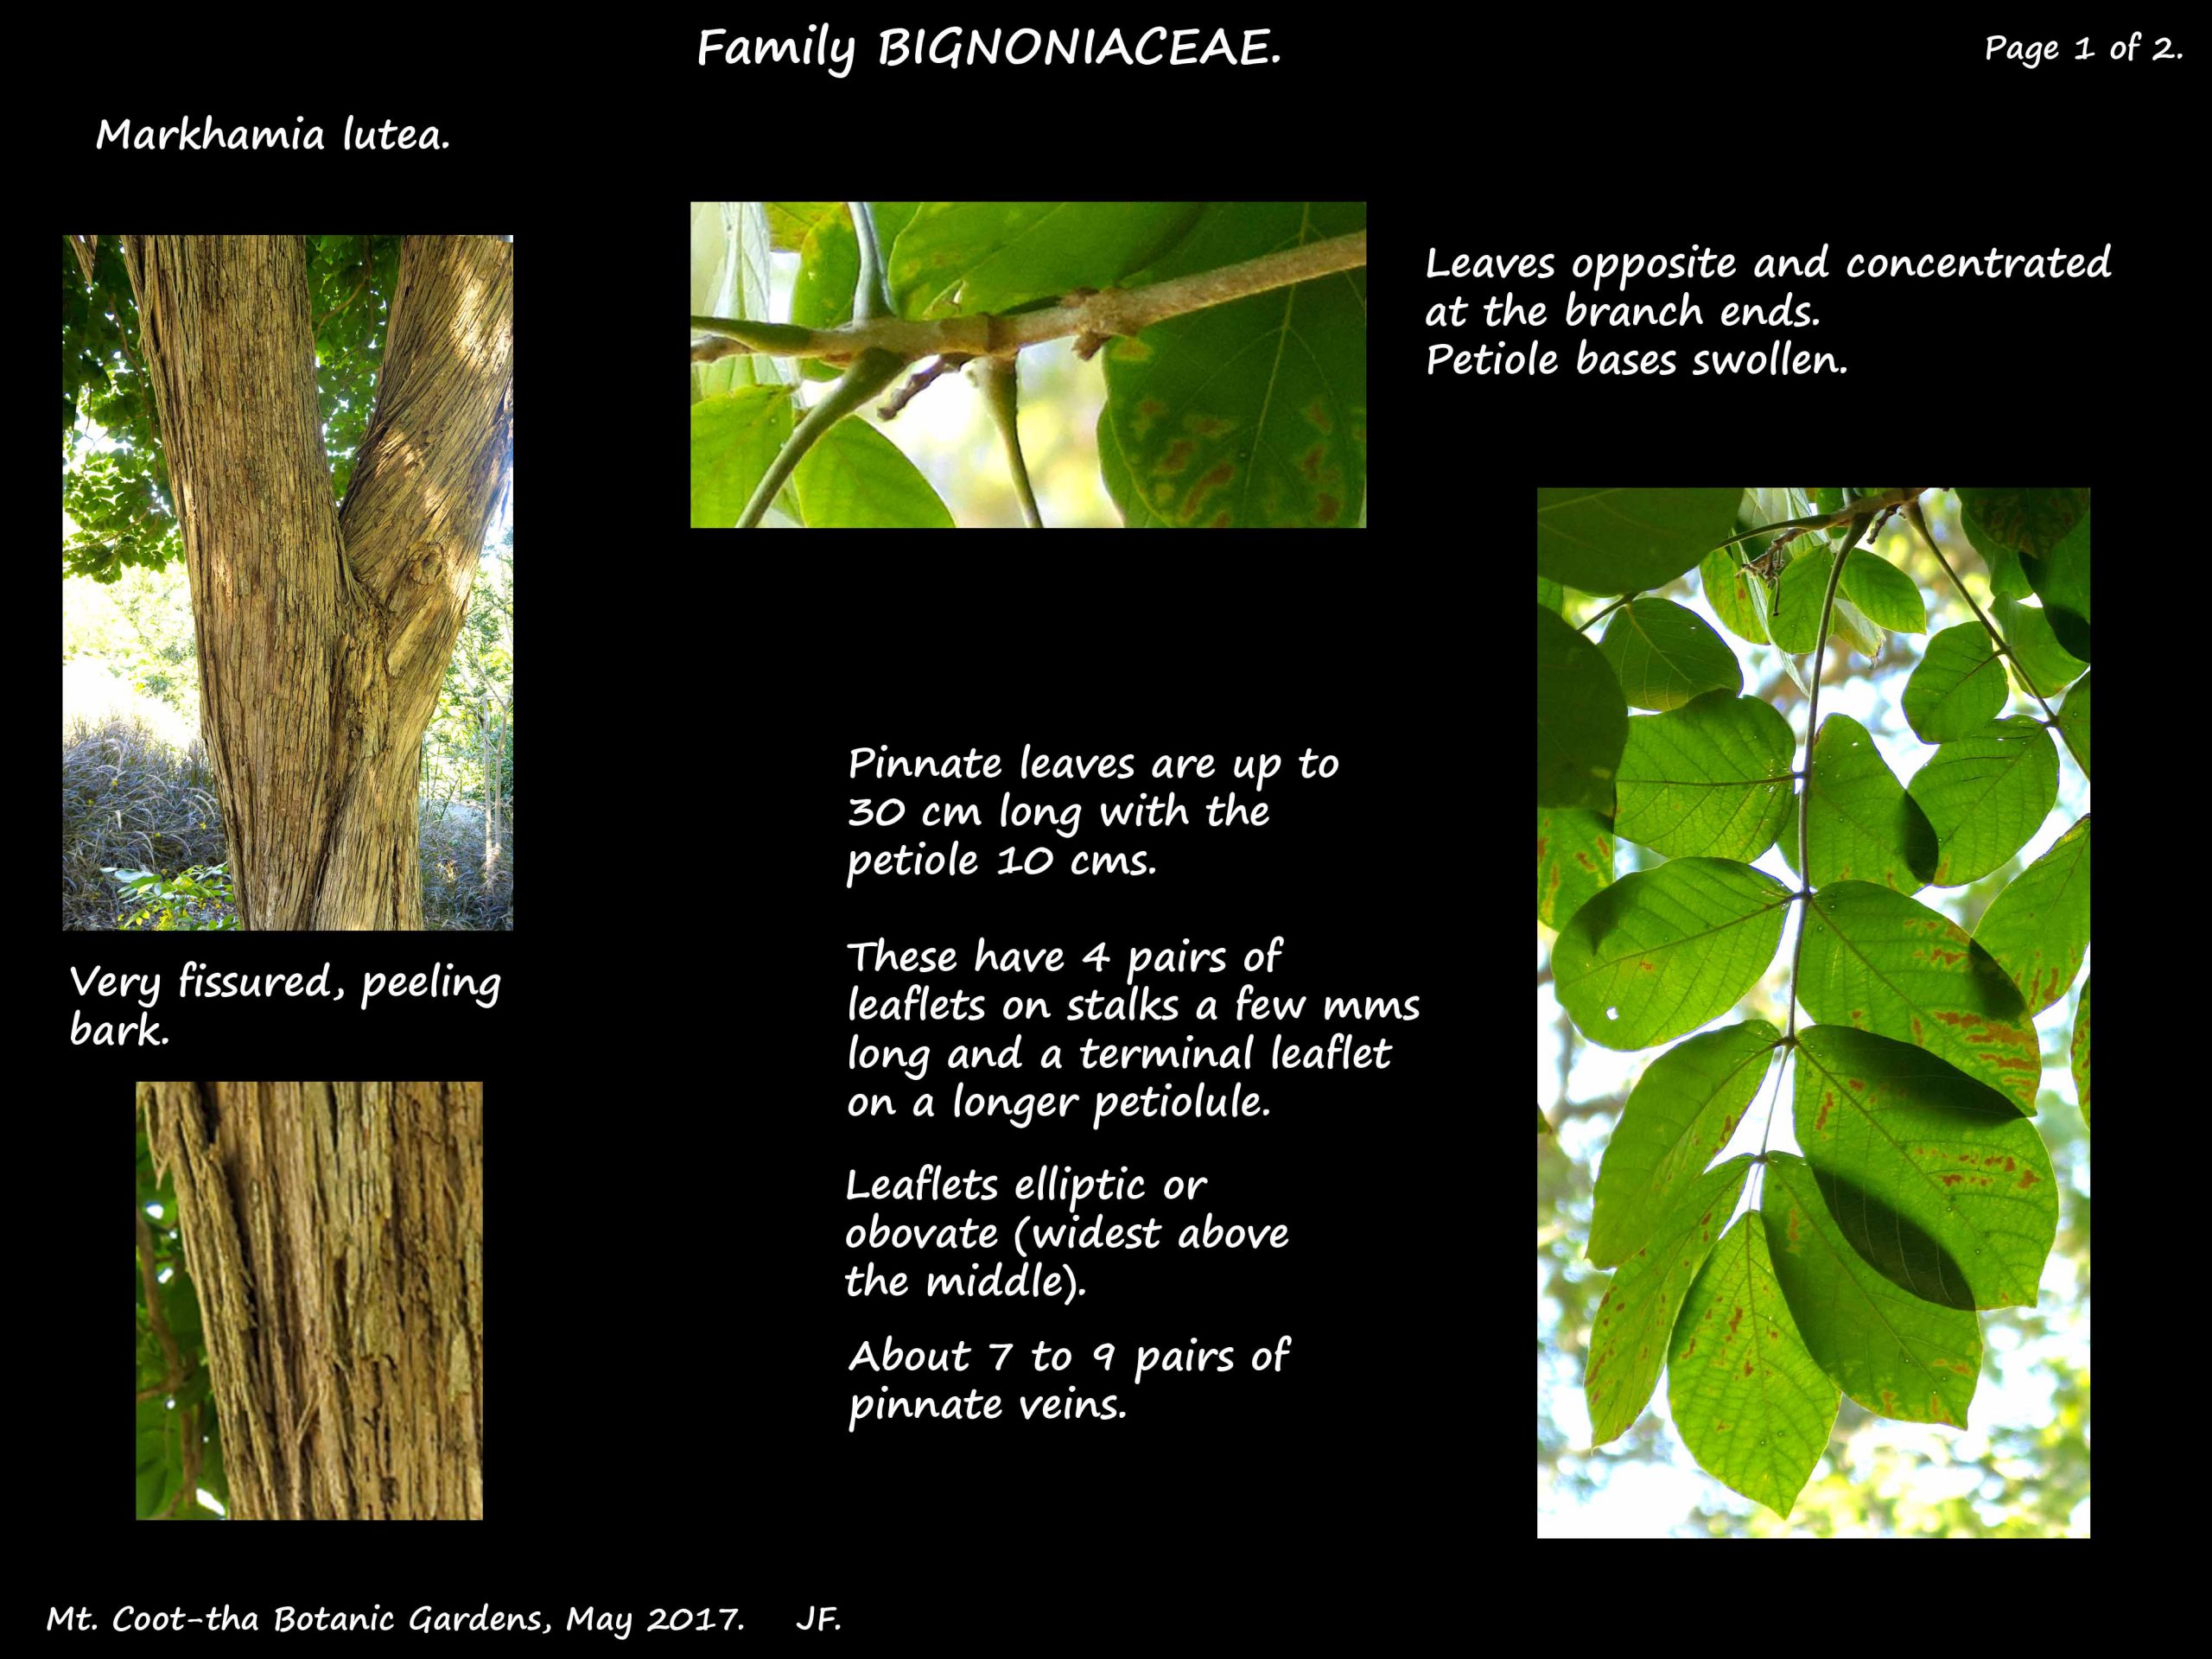 1 Markhamia tree & leaf